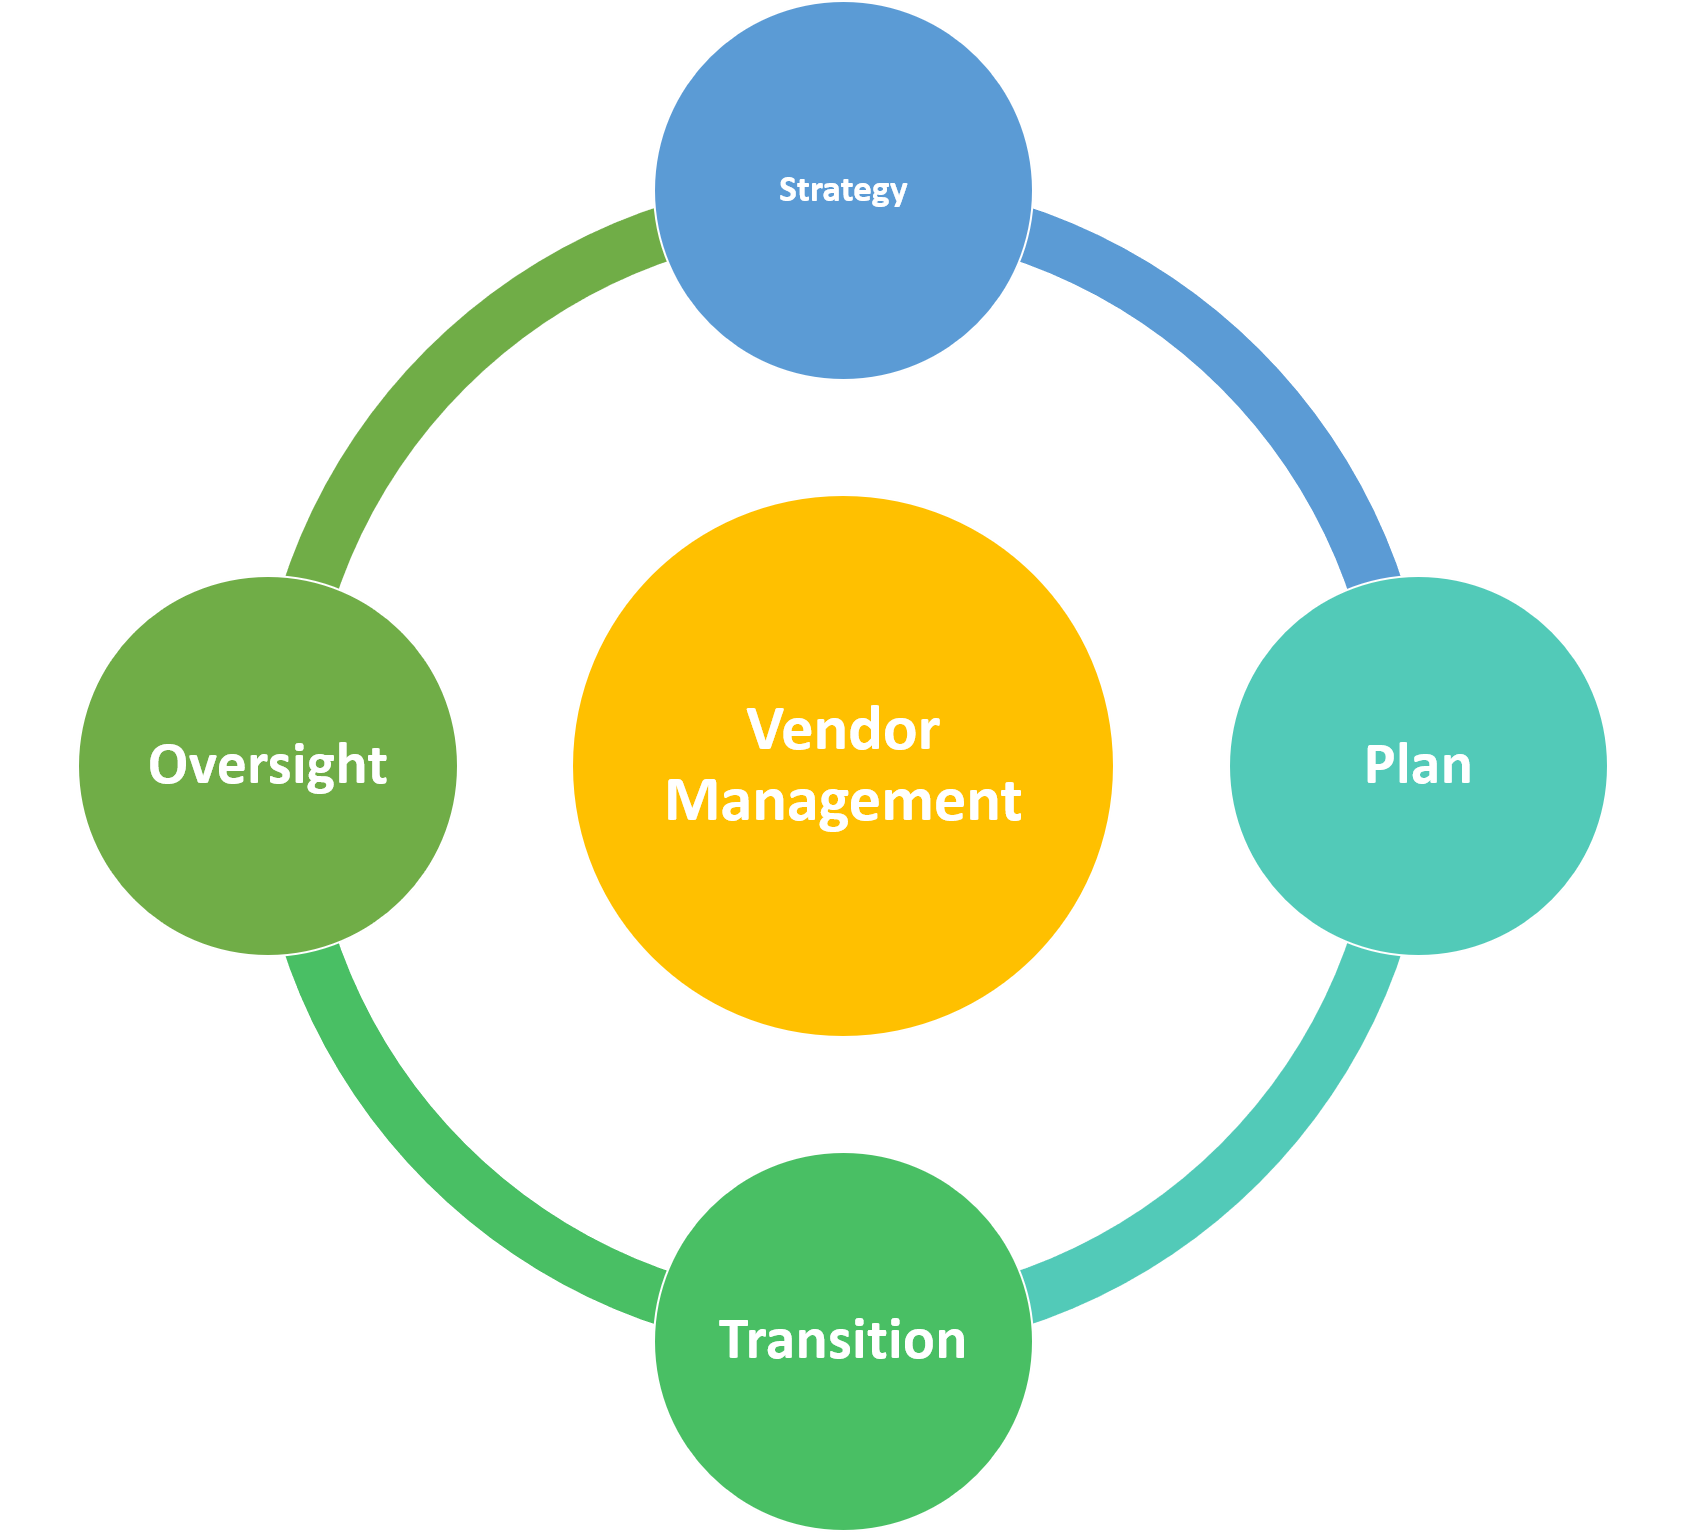 The role of planning. Vendor Management картинки. Менеджмент. Organizing Management. Management functions.